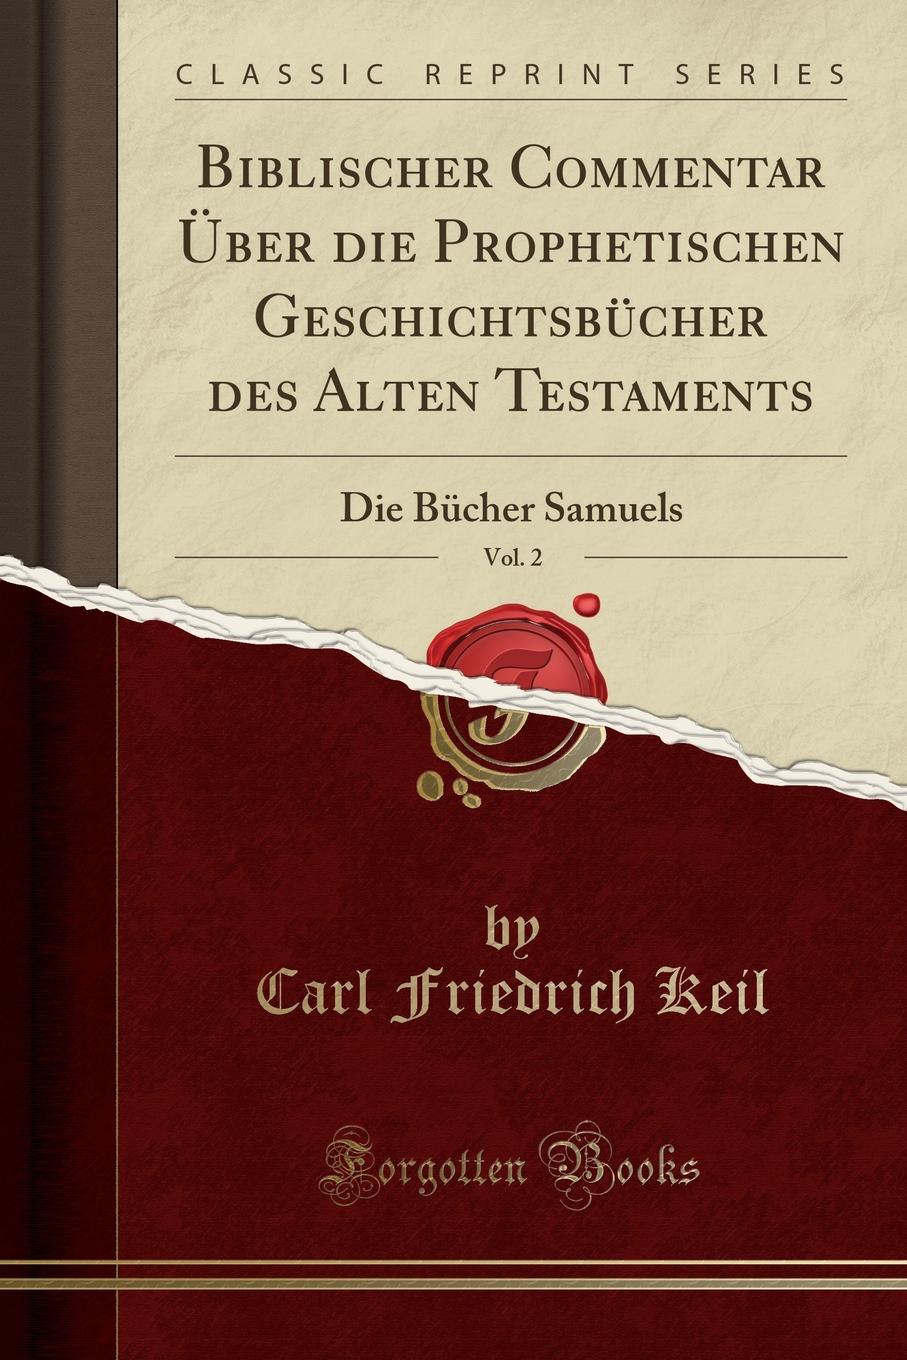 фото Biblischer Commentar Uber die Prophetischen Geschichtsbucher des Alten Testaments, Vol. 2. Die Bucher Samuels (Classic Reprint)